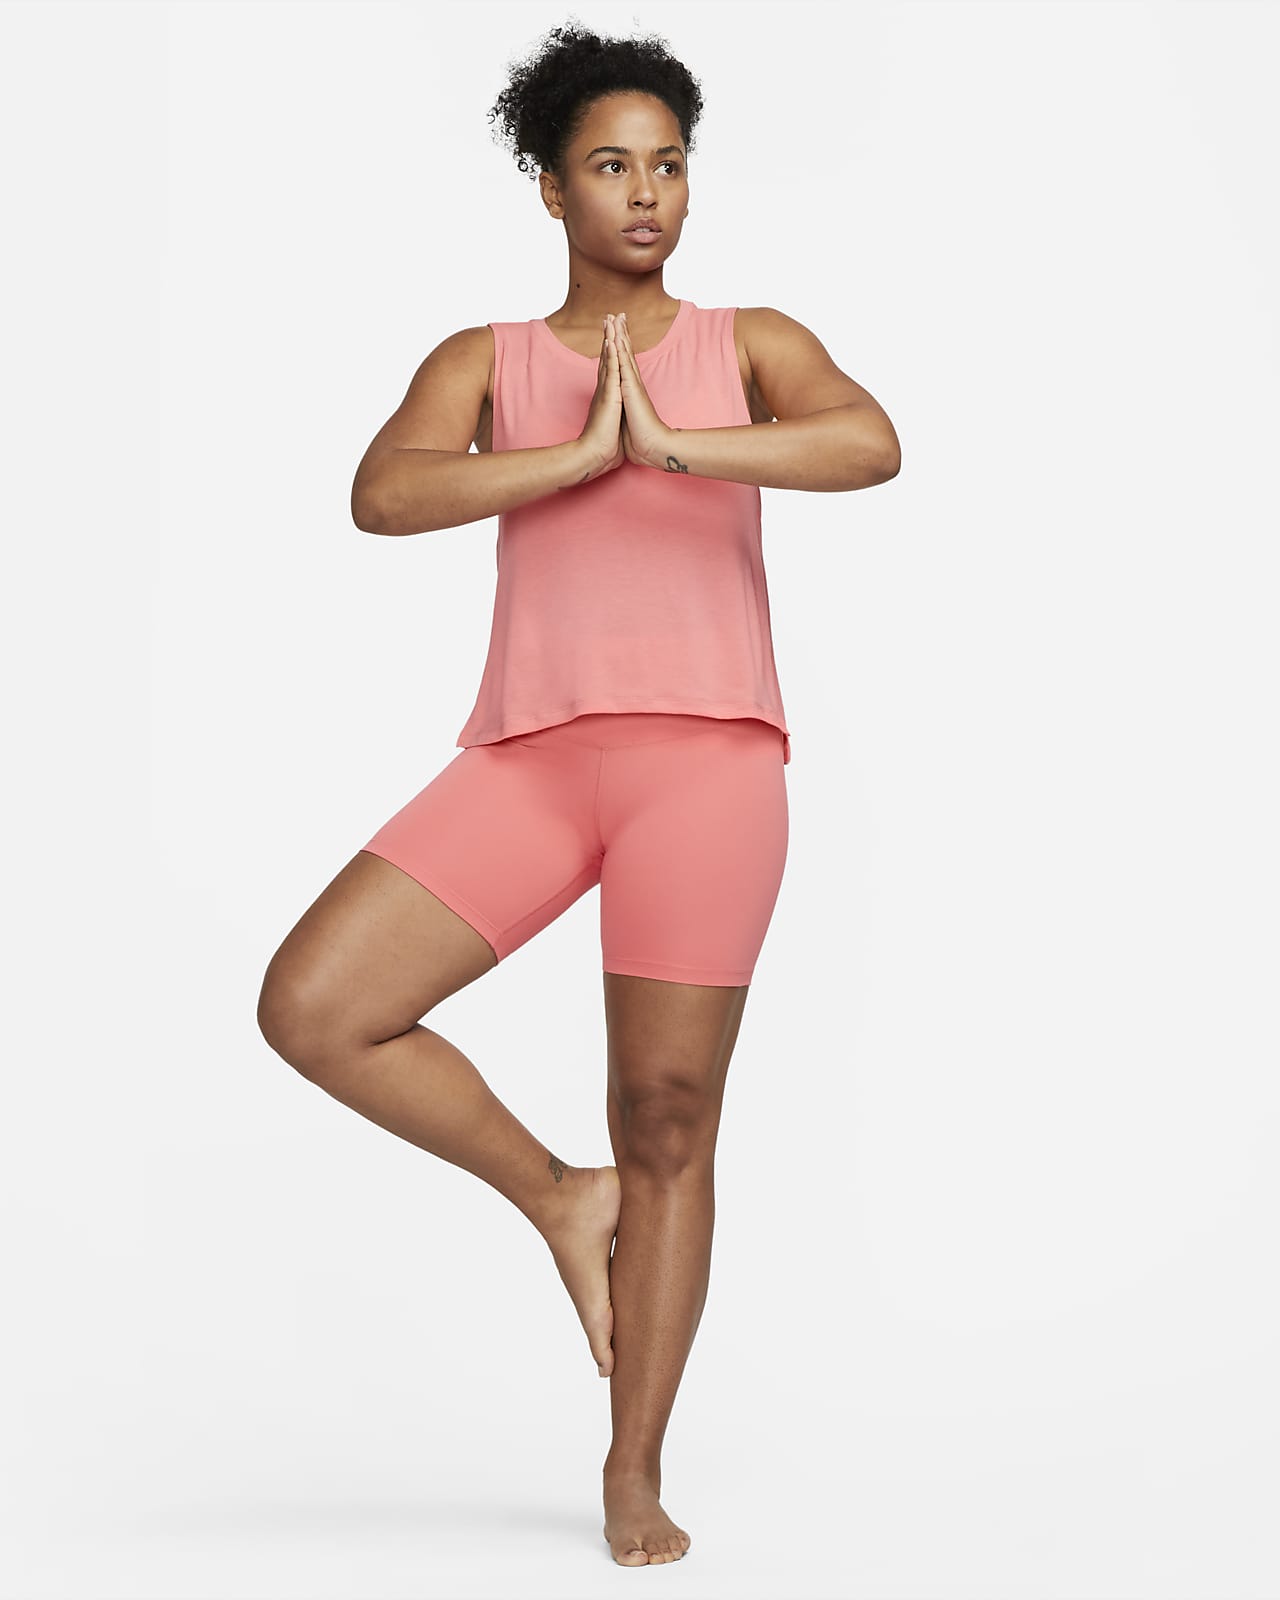 Nike Yoga Women's High-Waisted 7 Shorts.